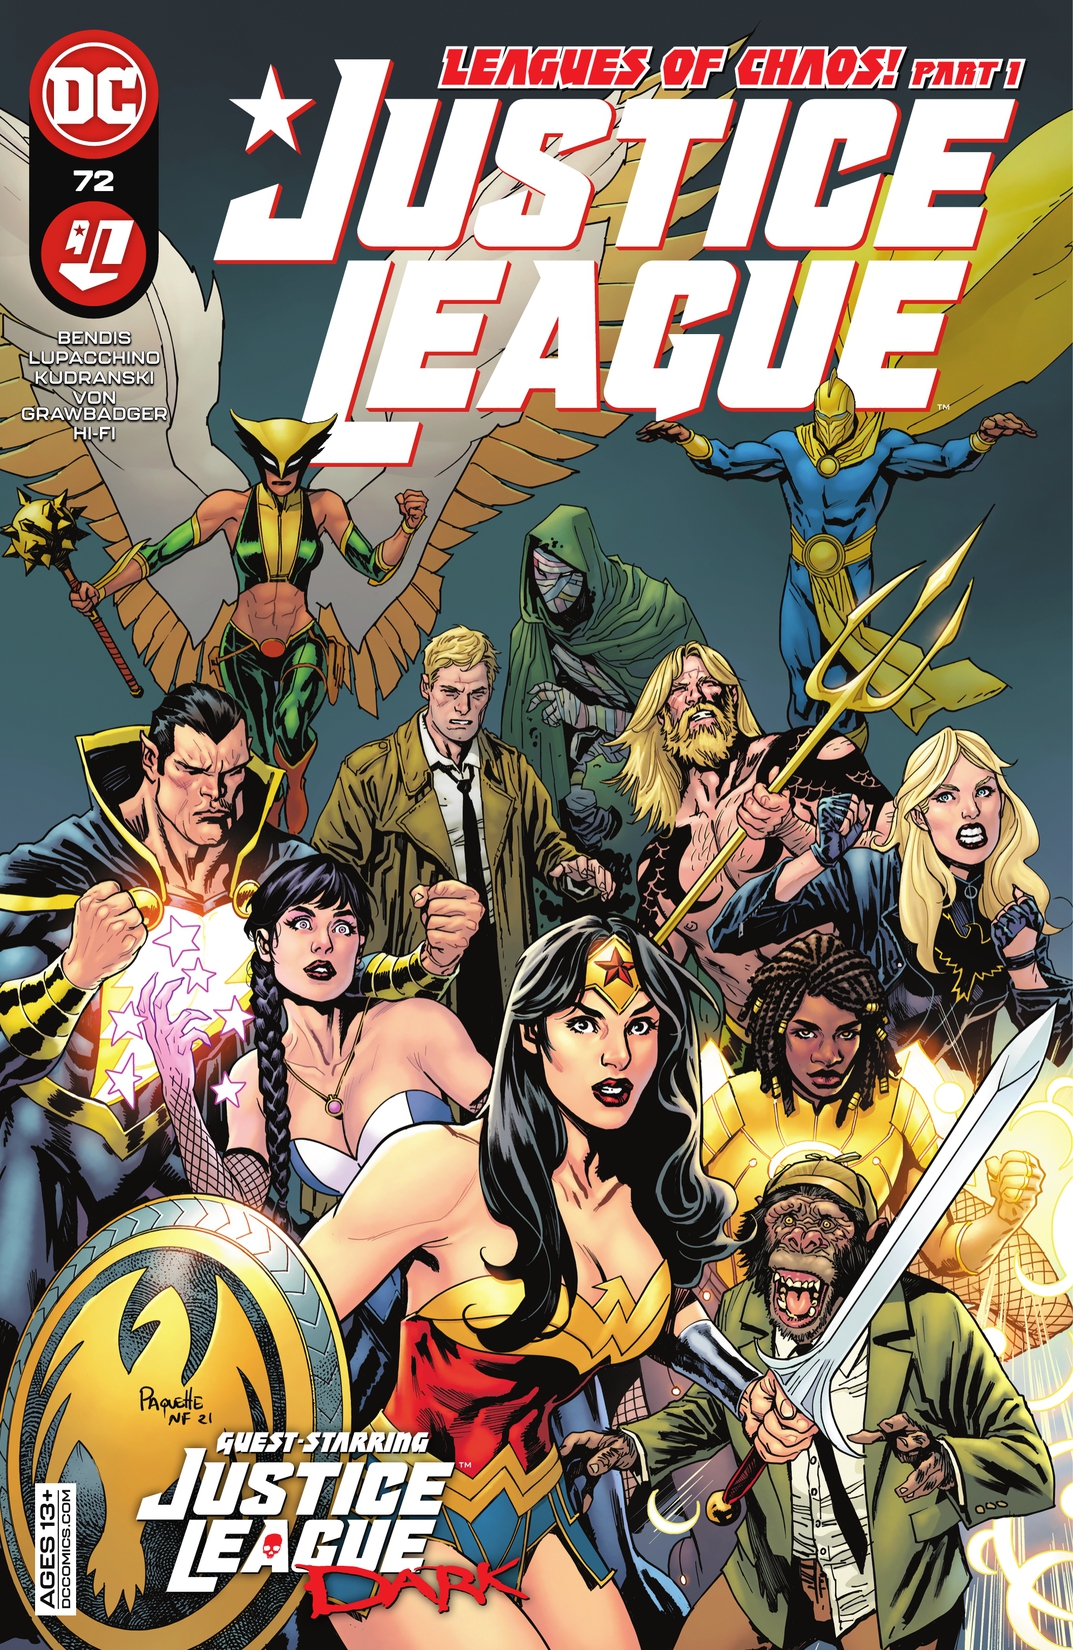 Justice League (2018-) #72 preview images